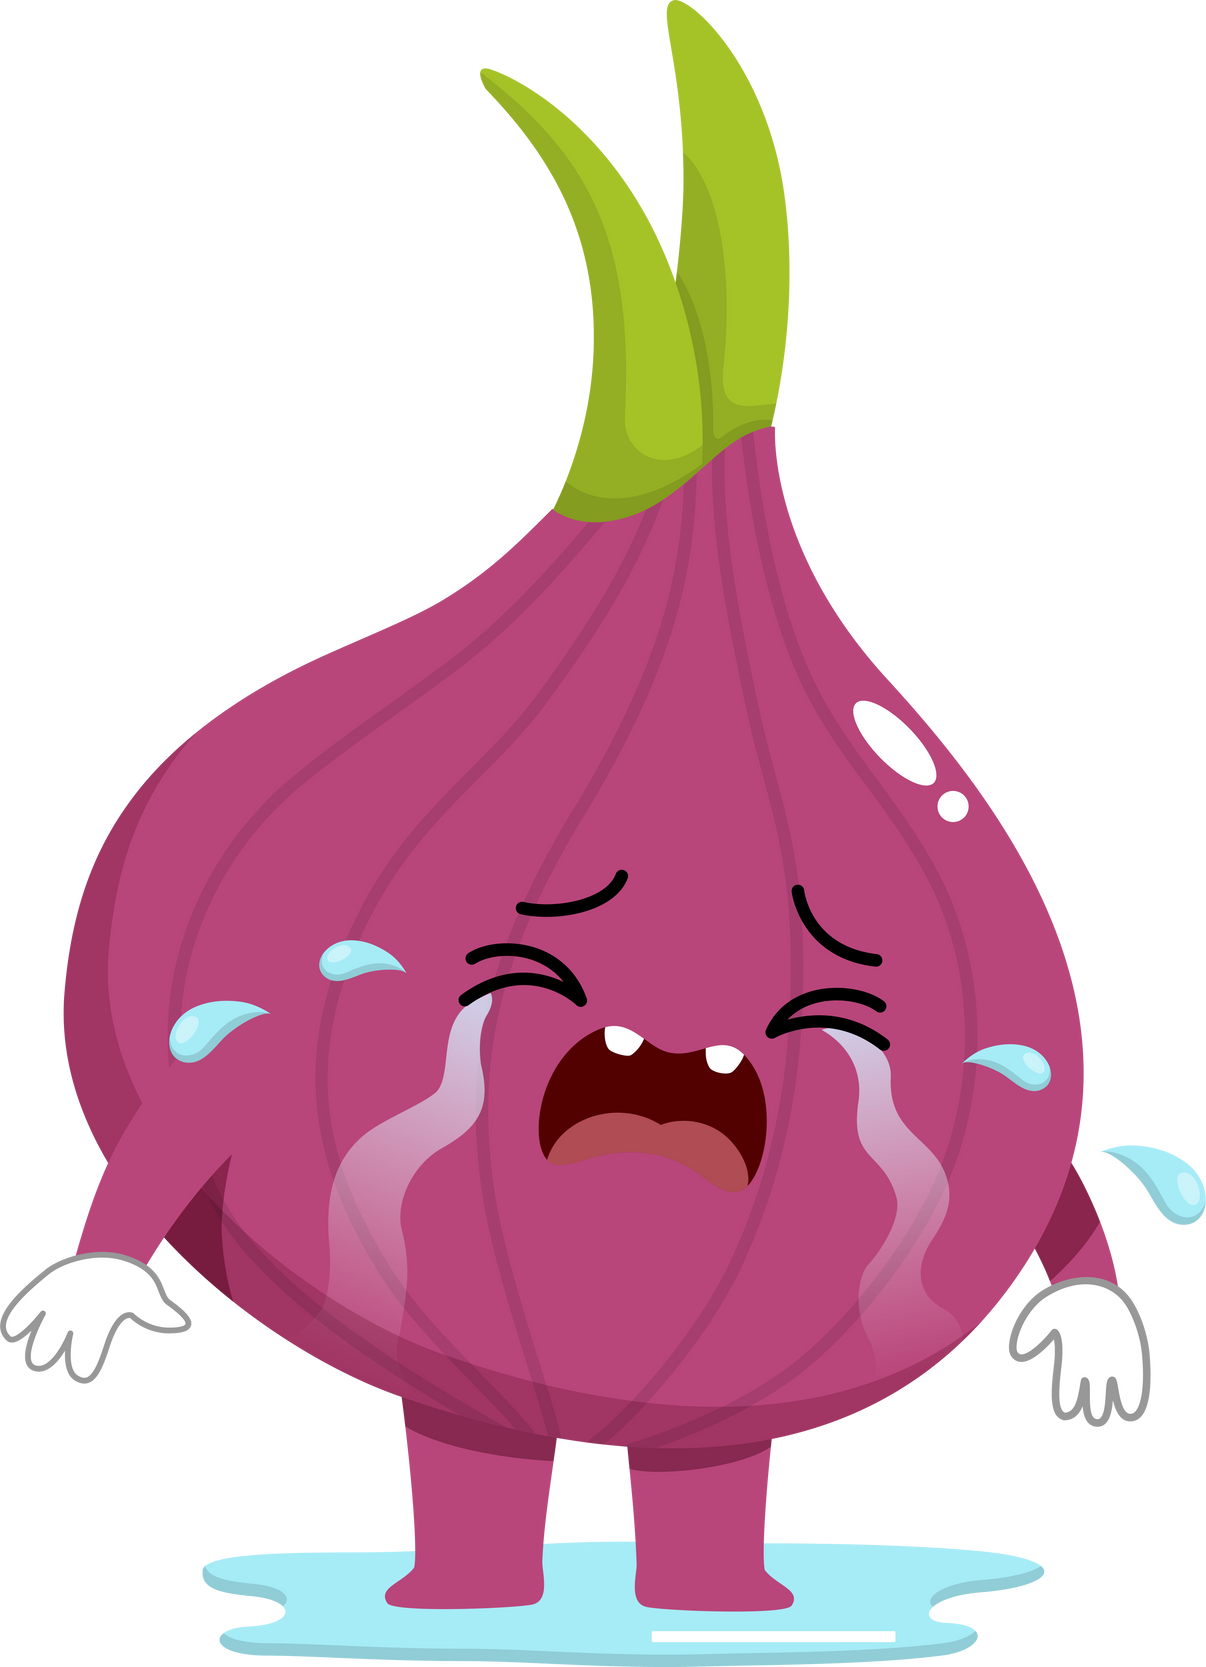 Crying Onion Illustration